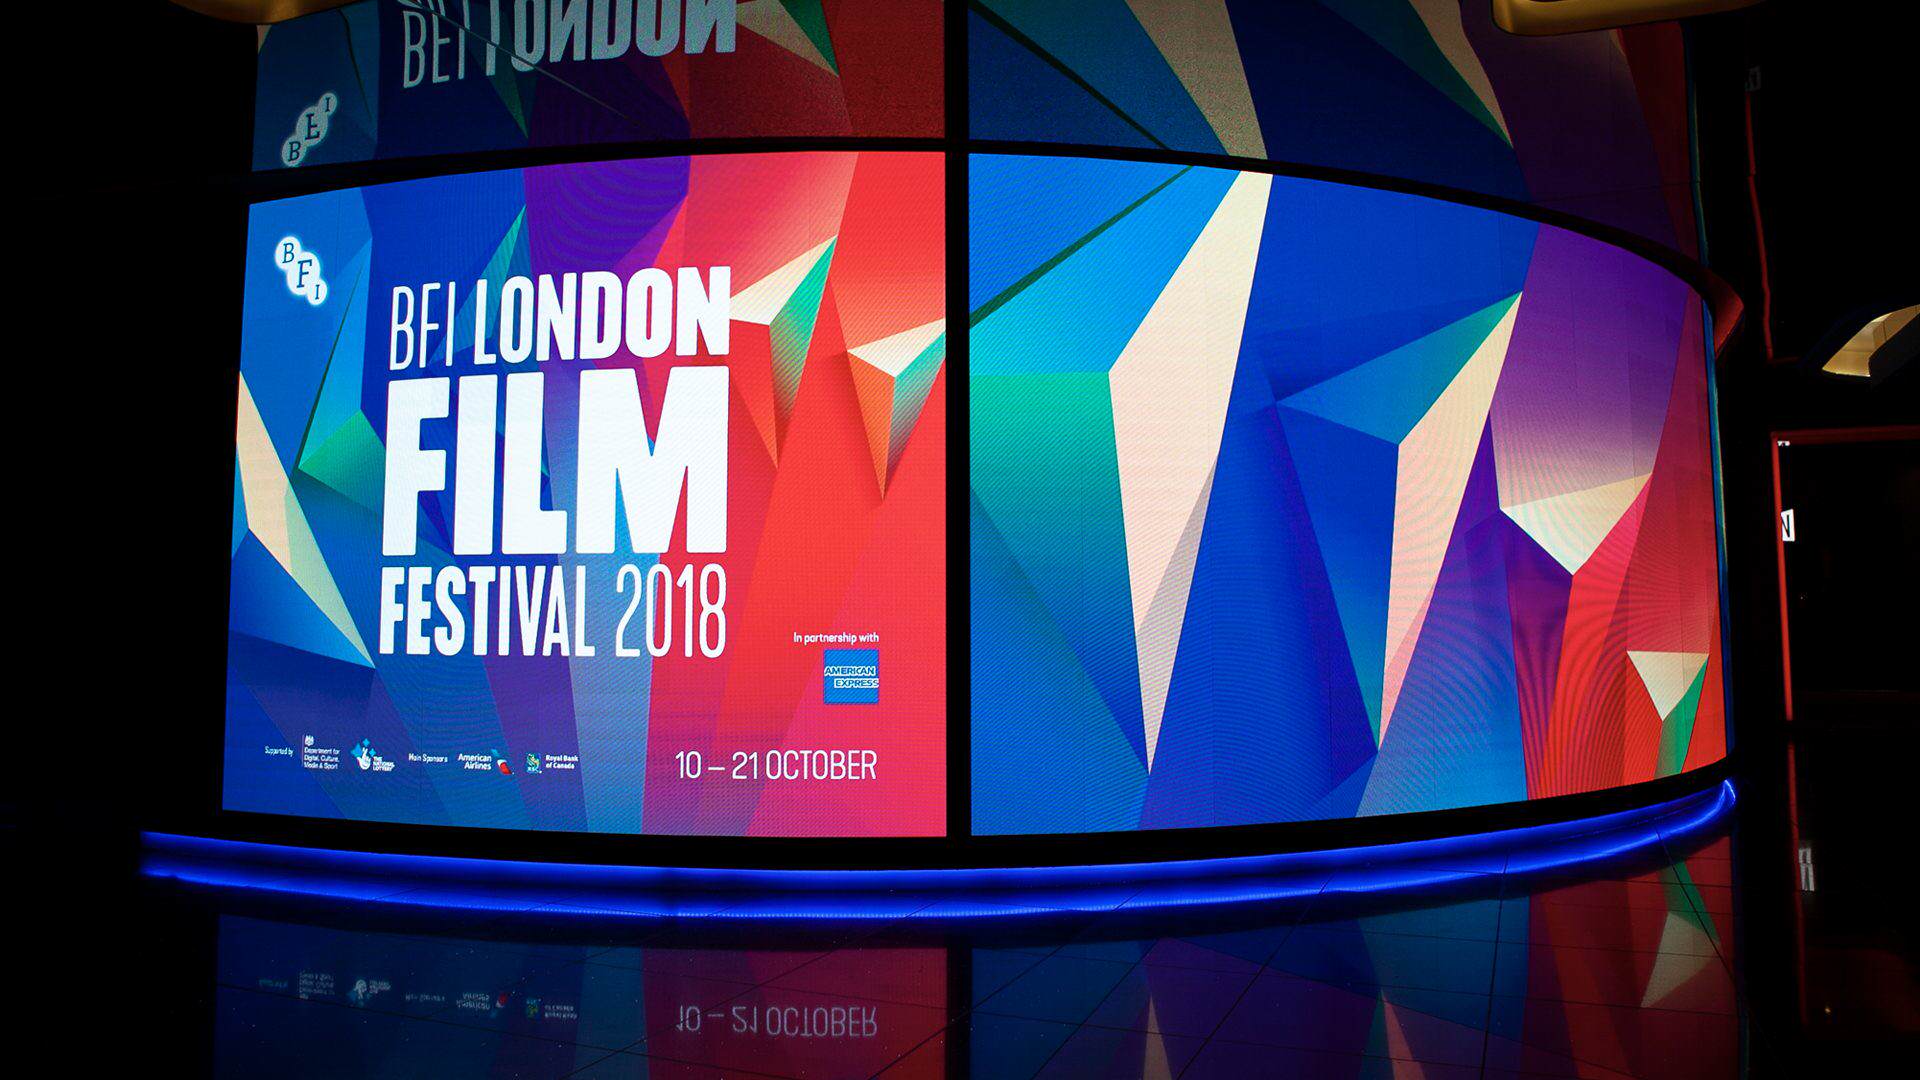 BFI London Film Festival DBLG